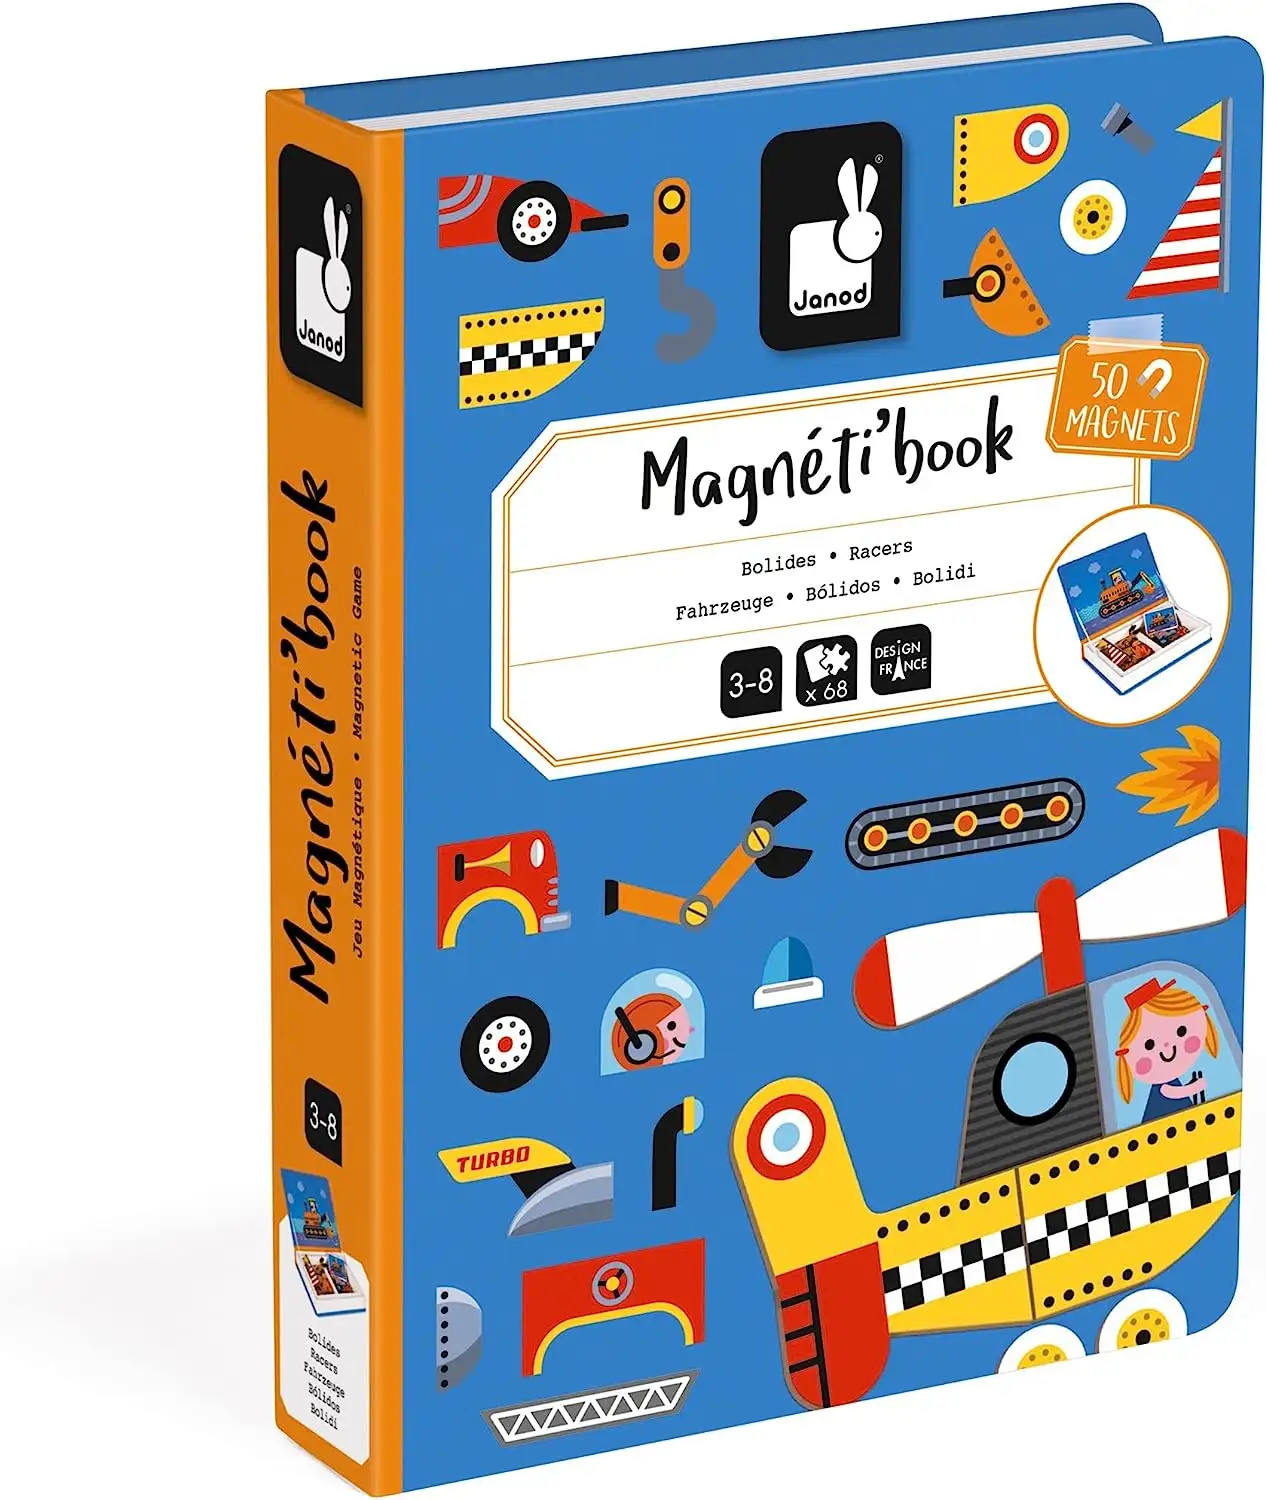 Magnetibook 69ชิ้นแม่เหล็กรูปนักแข่งยานพาหนะเกมจิ๊กซอว์แม่เหล็กหนังสือบอร์ดสำหรับเด็กบริการการพิมพ์เพื่อการศึกษา